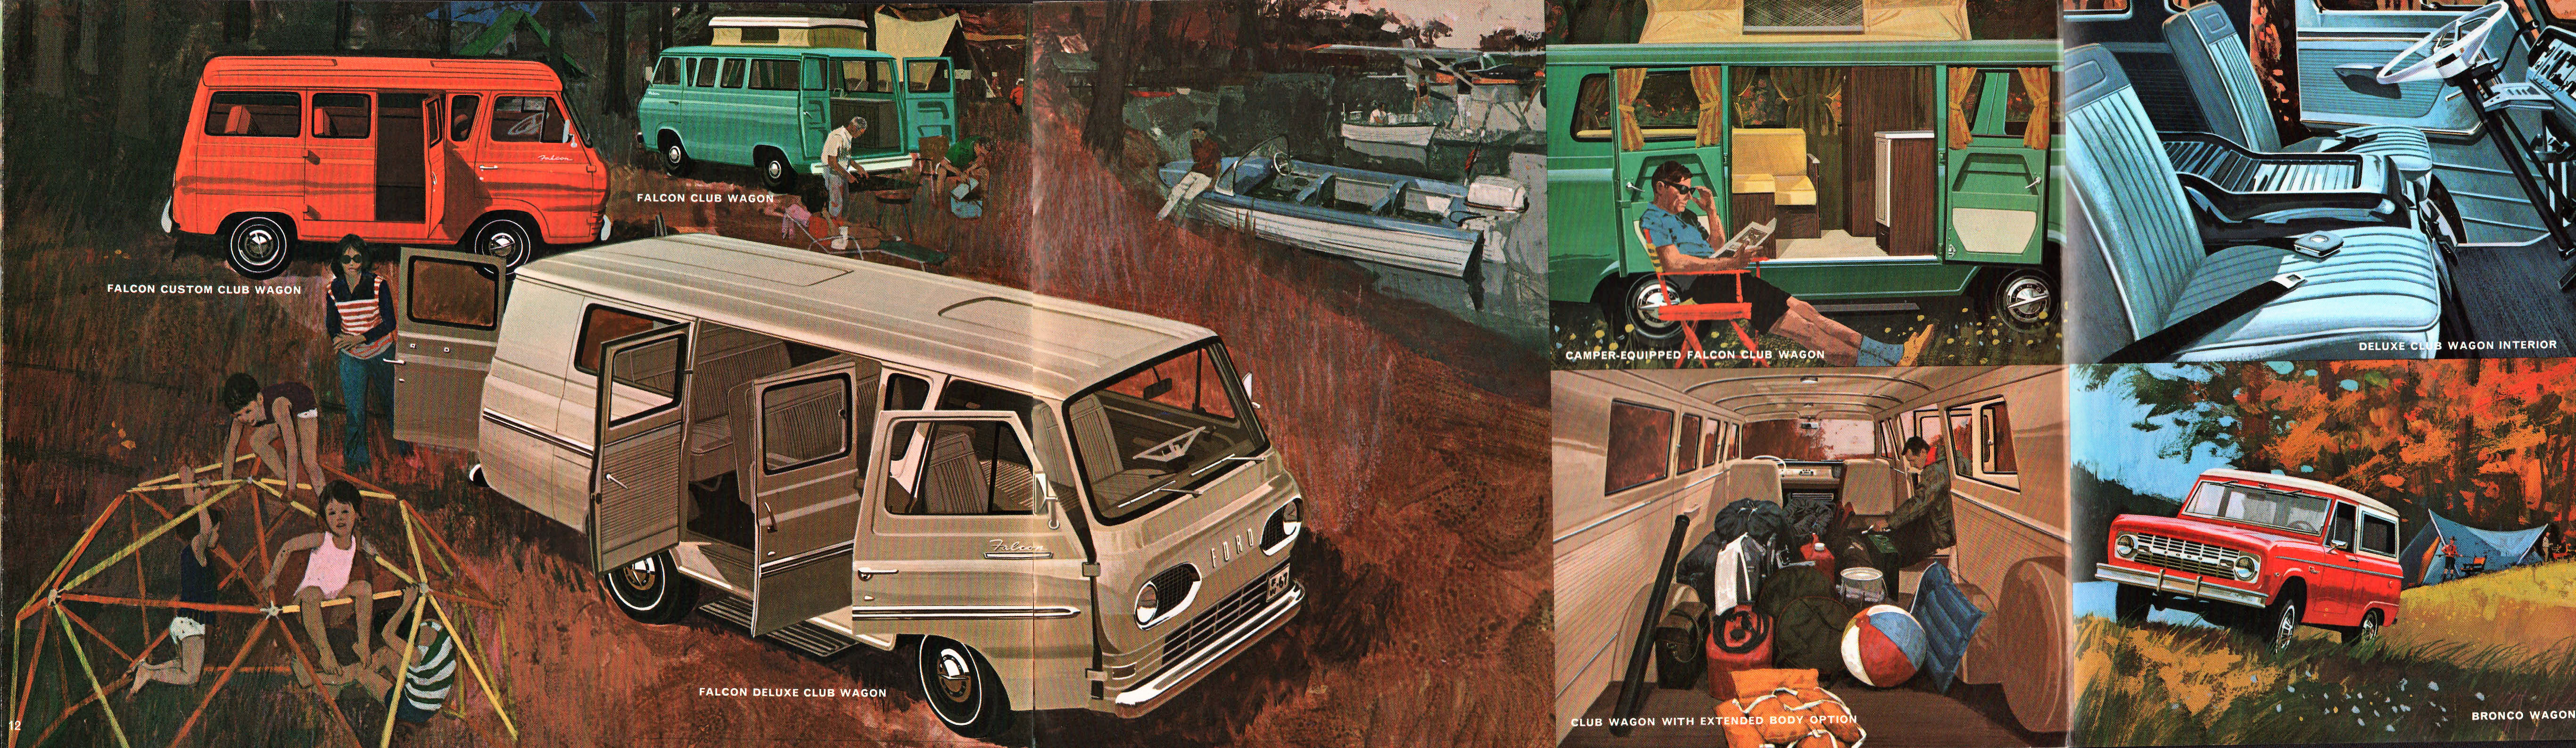 1967_Ford_Wagons_Rev-12-13